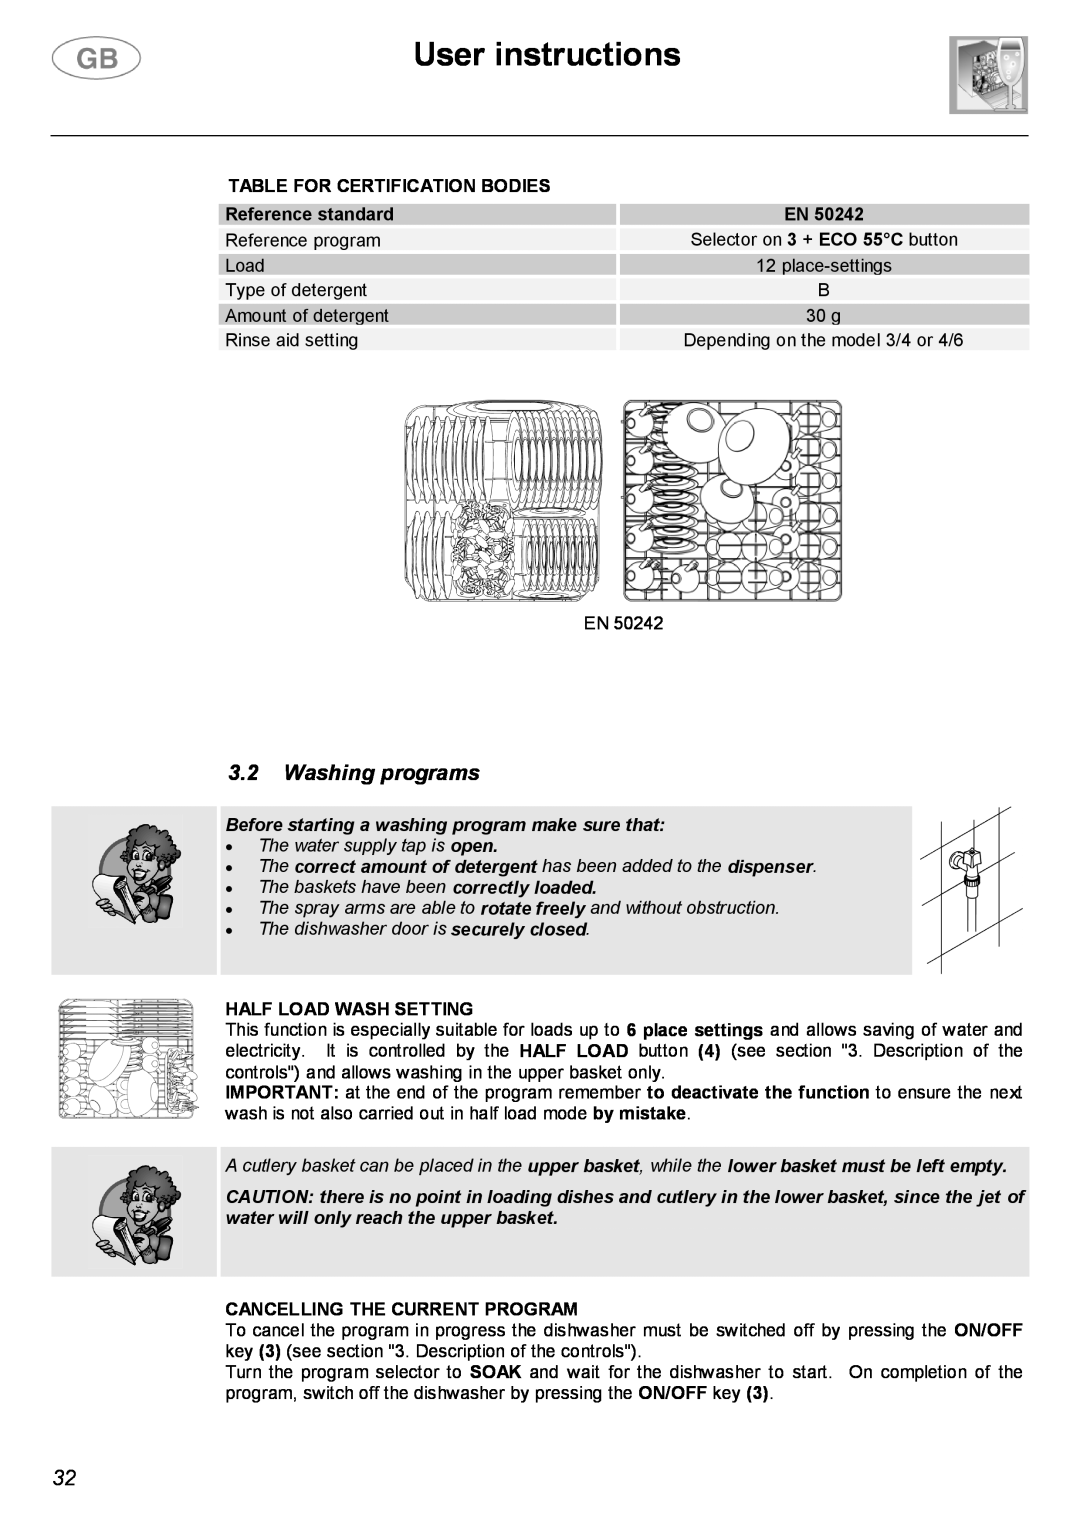 Smeg LVF32G instruction manual Washing programs, Table For Certification Bodies, Reference standard, Half Load Wash Setting 